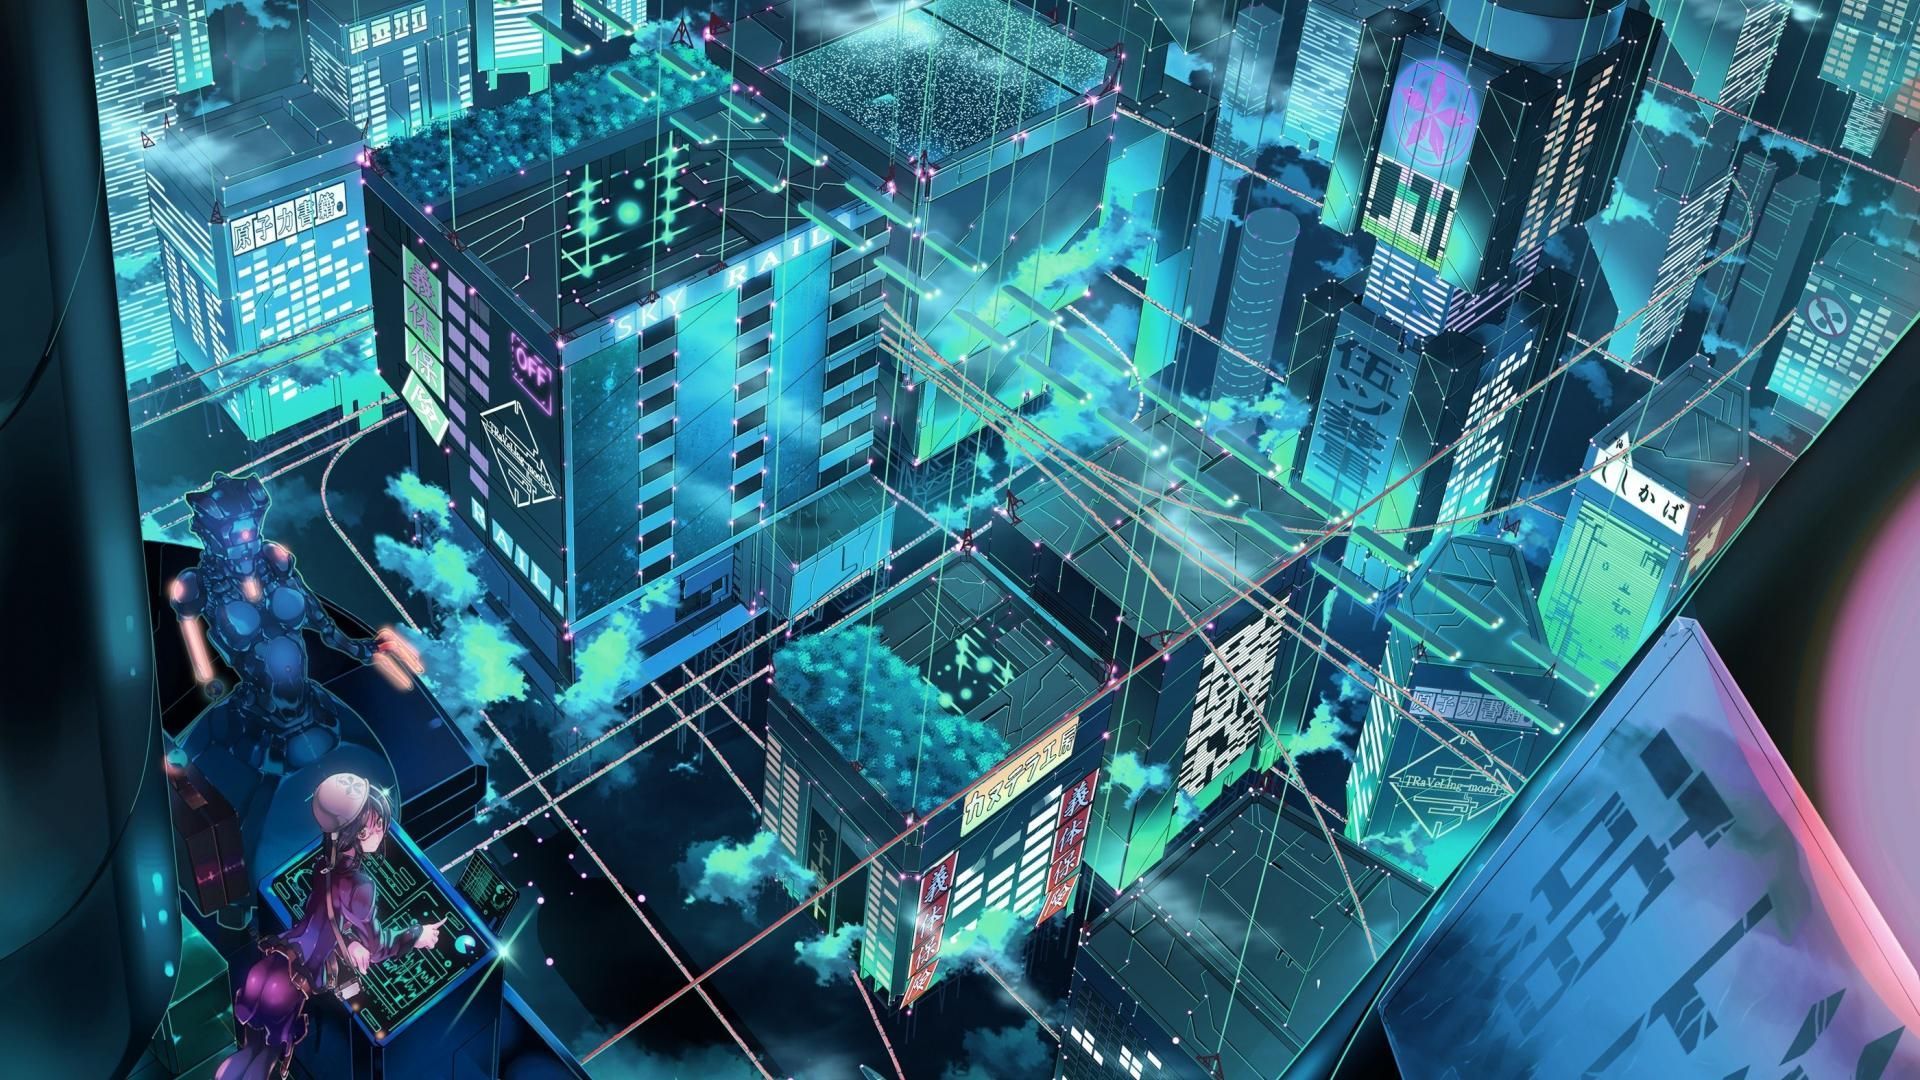 Anime Futuristic City Wallpaper Free Anime Futuristic City Background